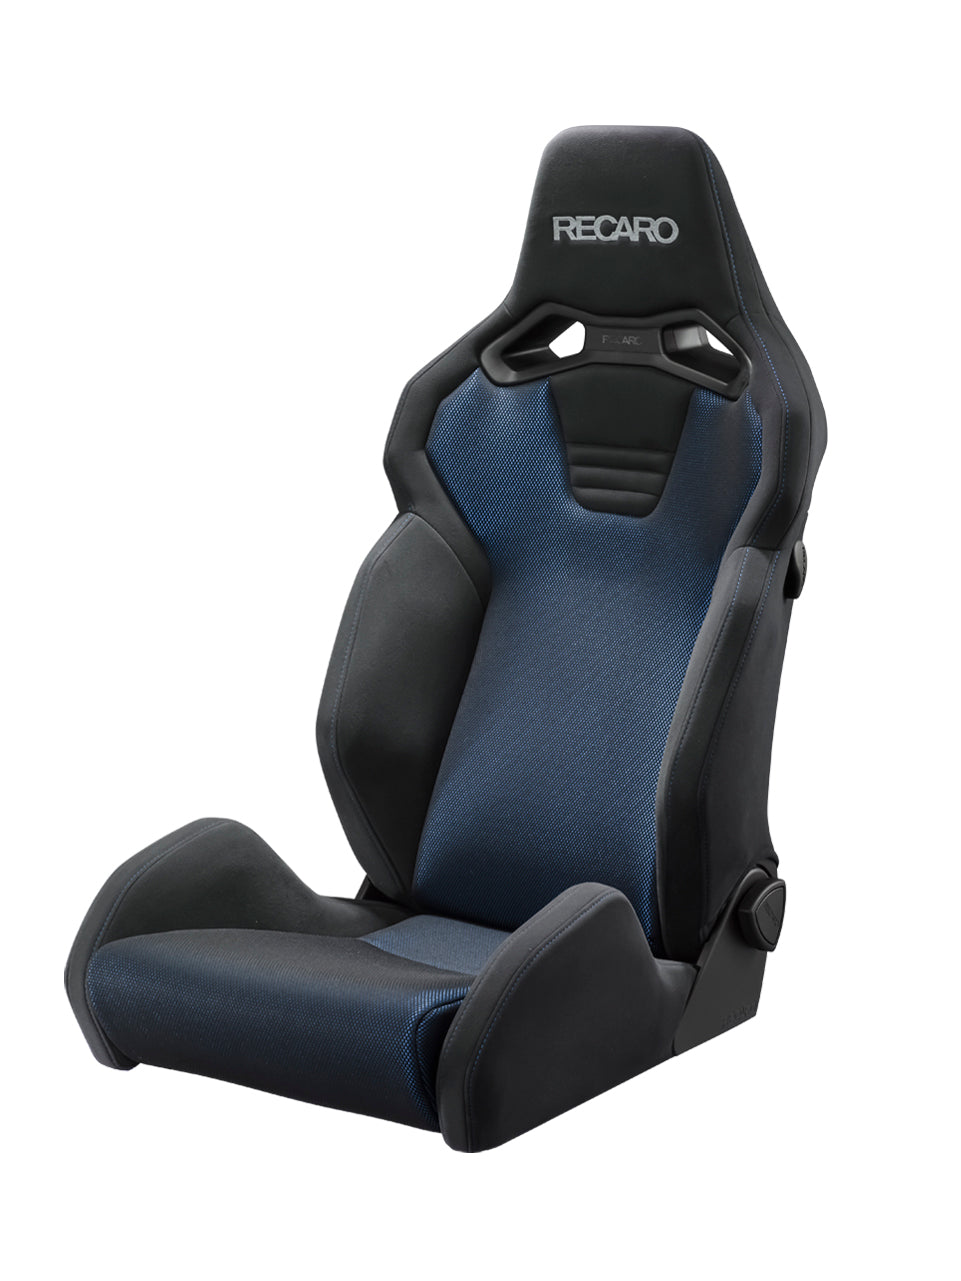 RECARO SR-S BK100 BL BK BRILLIANT MESH BLUE AND BLACK COLOR WITH HEATED SEATS 81-120.21.643-0